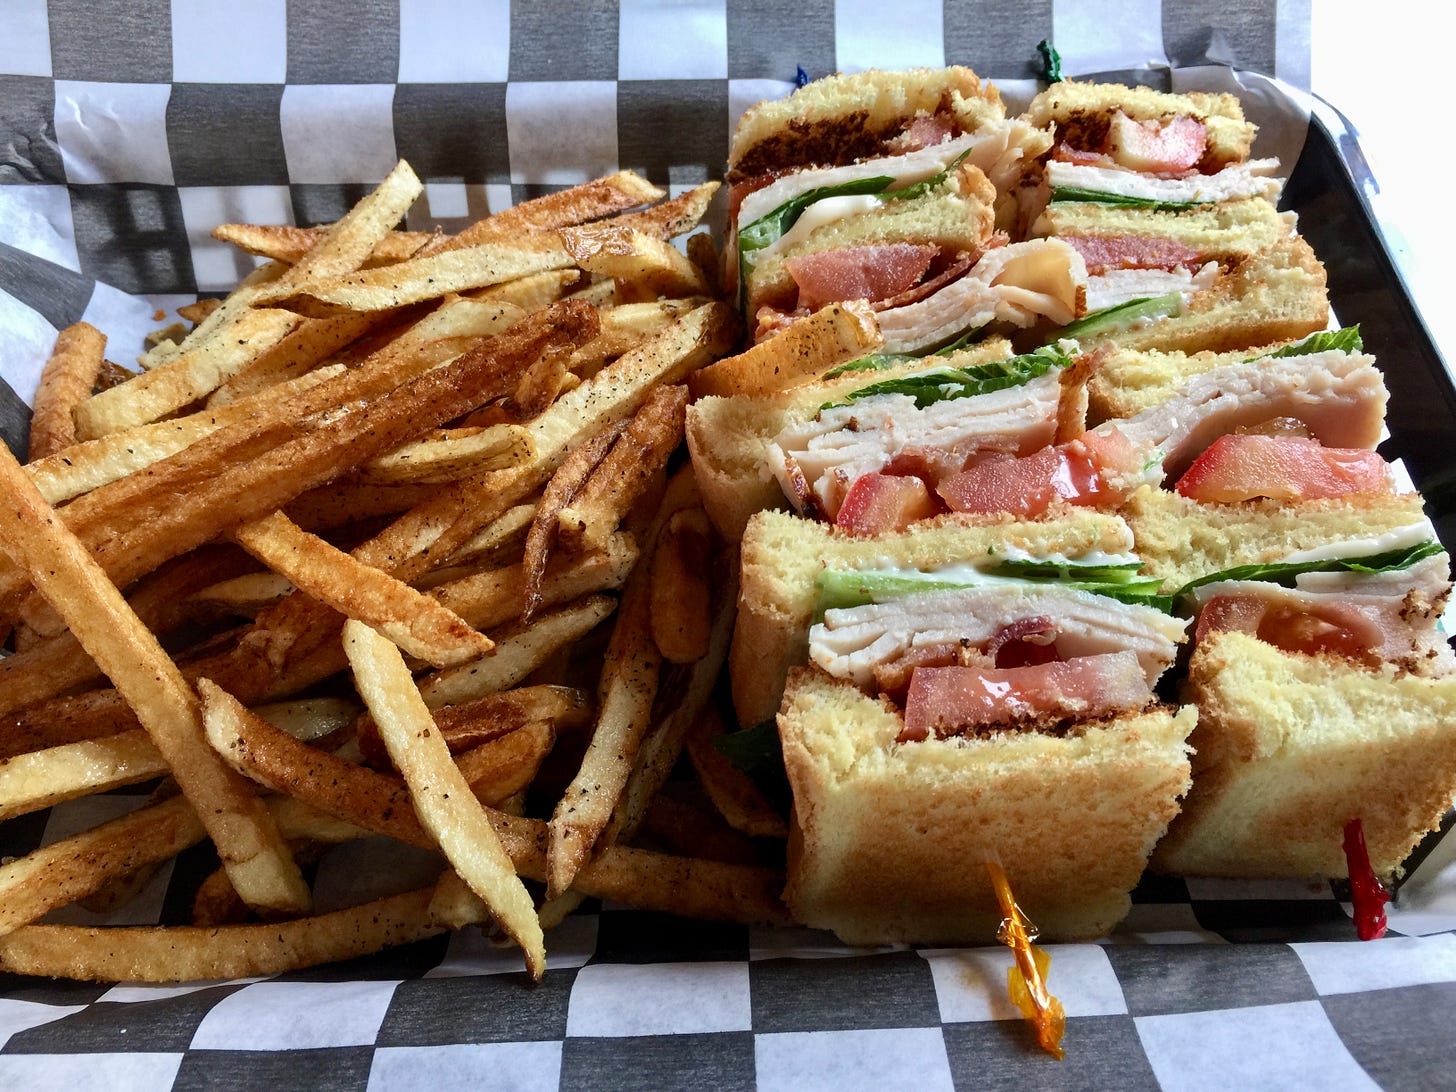 Club sandwich at The Lincoln Cafe, Shanksville, Penn.